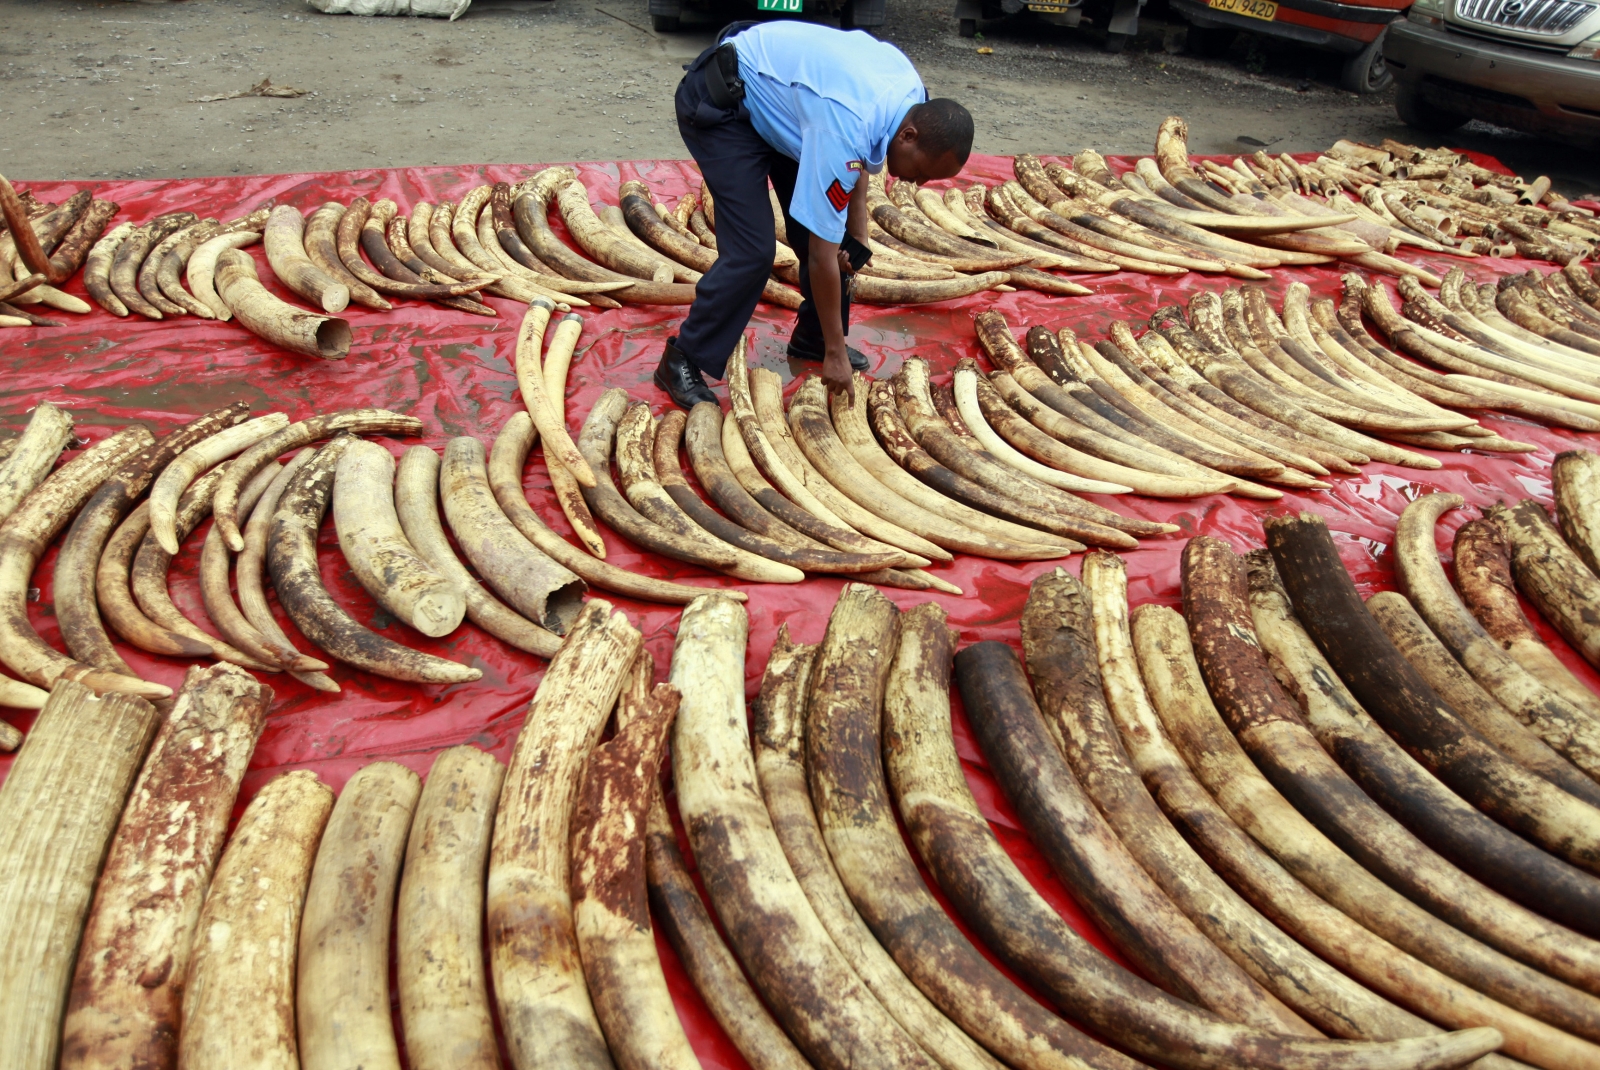 China's skyrocketing demand for ivory will make elephants extinct ...